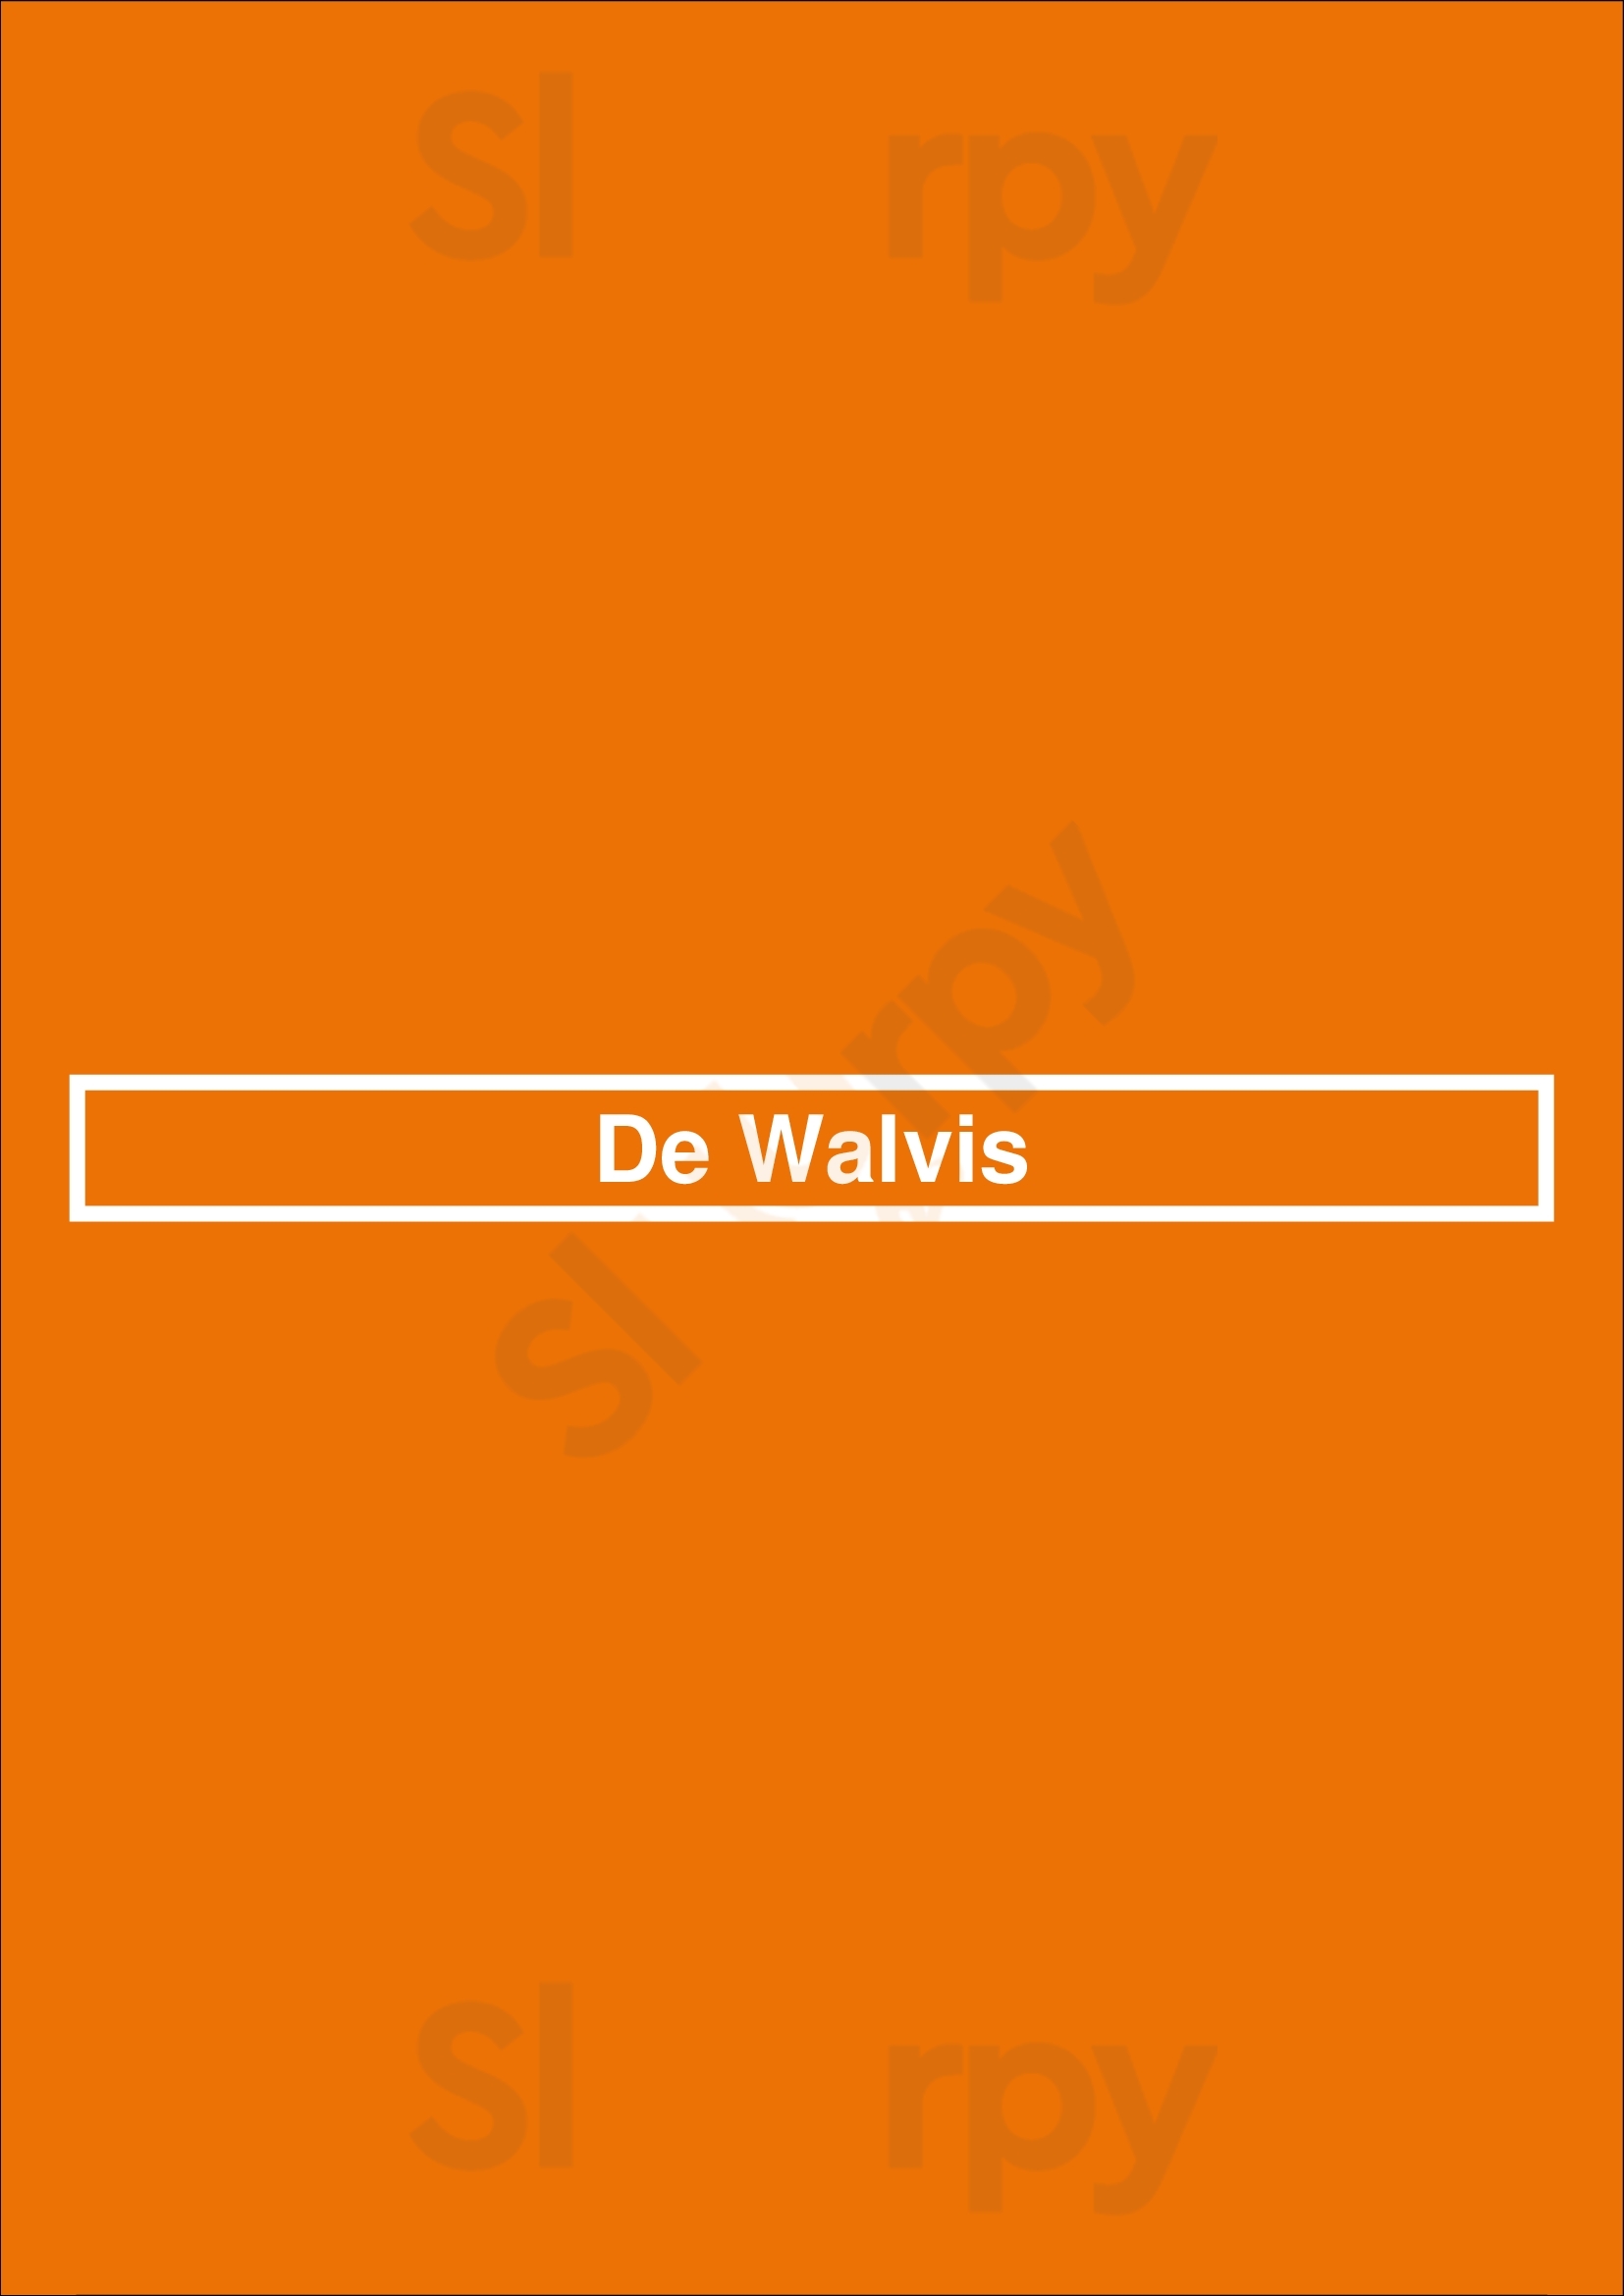 De Walvis Amsterdam Menu - 1